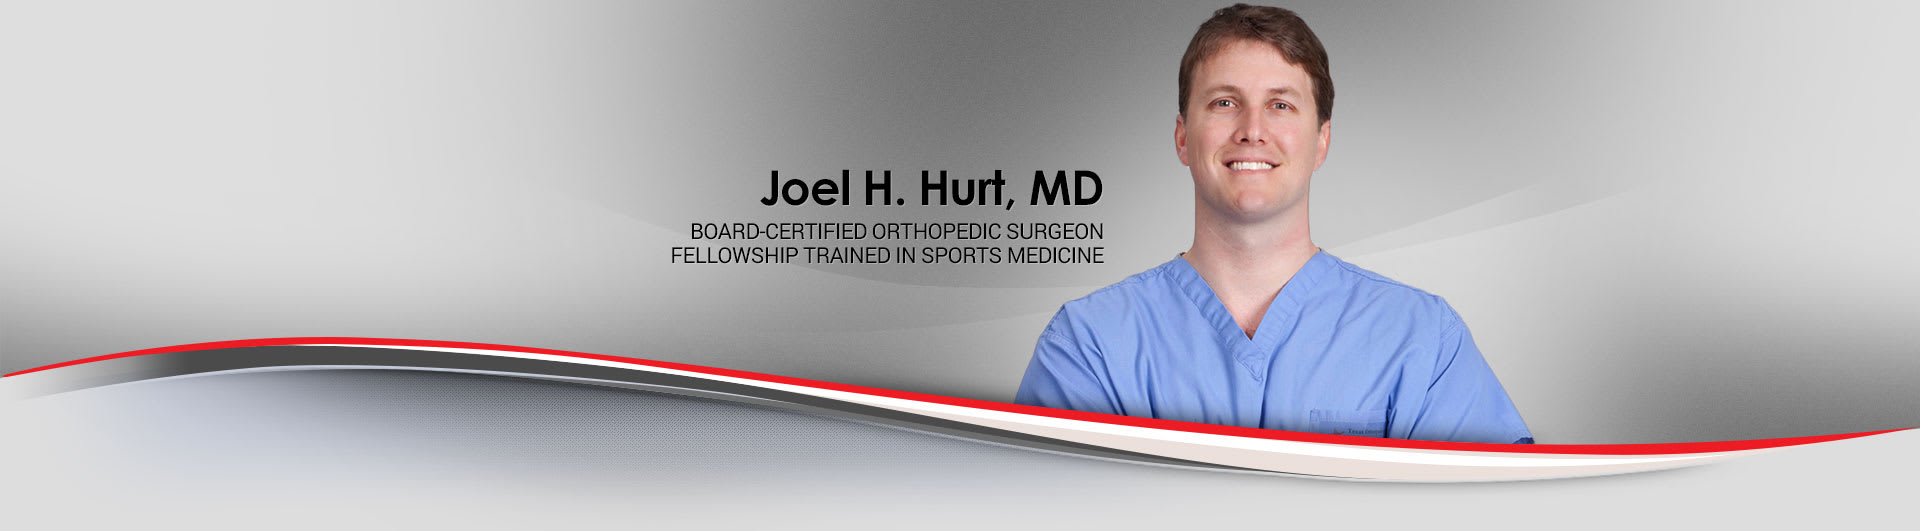 Dr. Joel Harborth Hurt